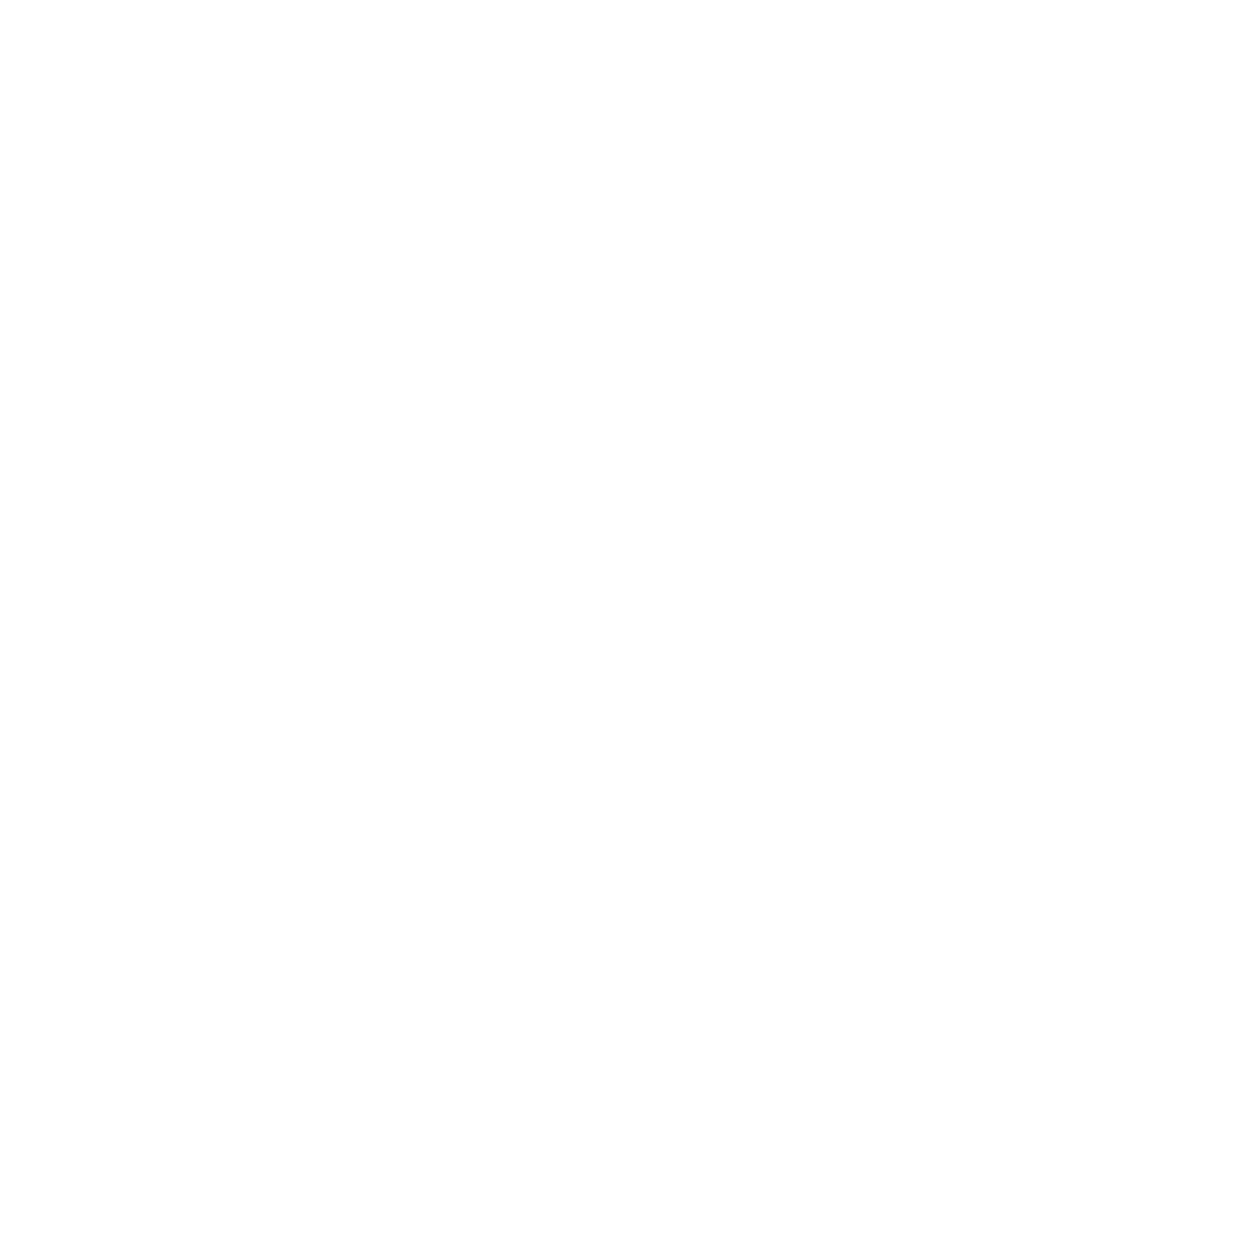 KING STEEL MACHINERY